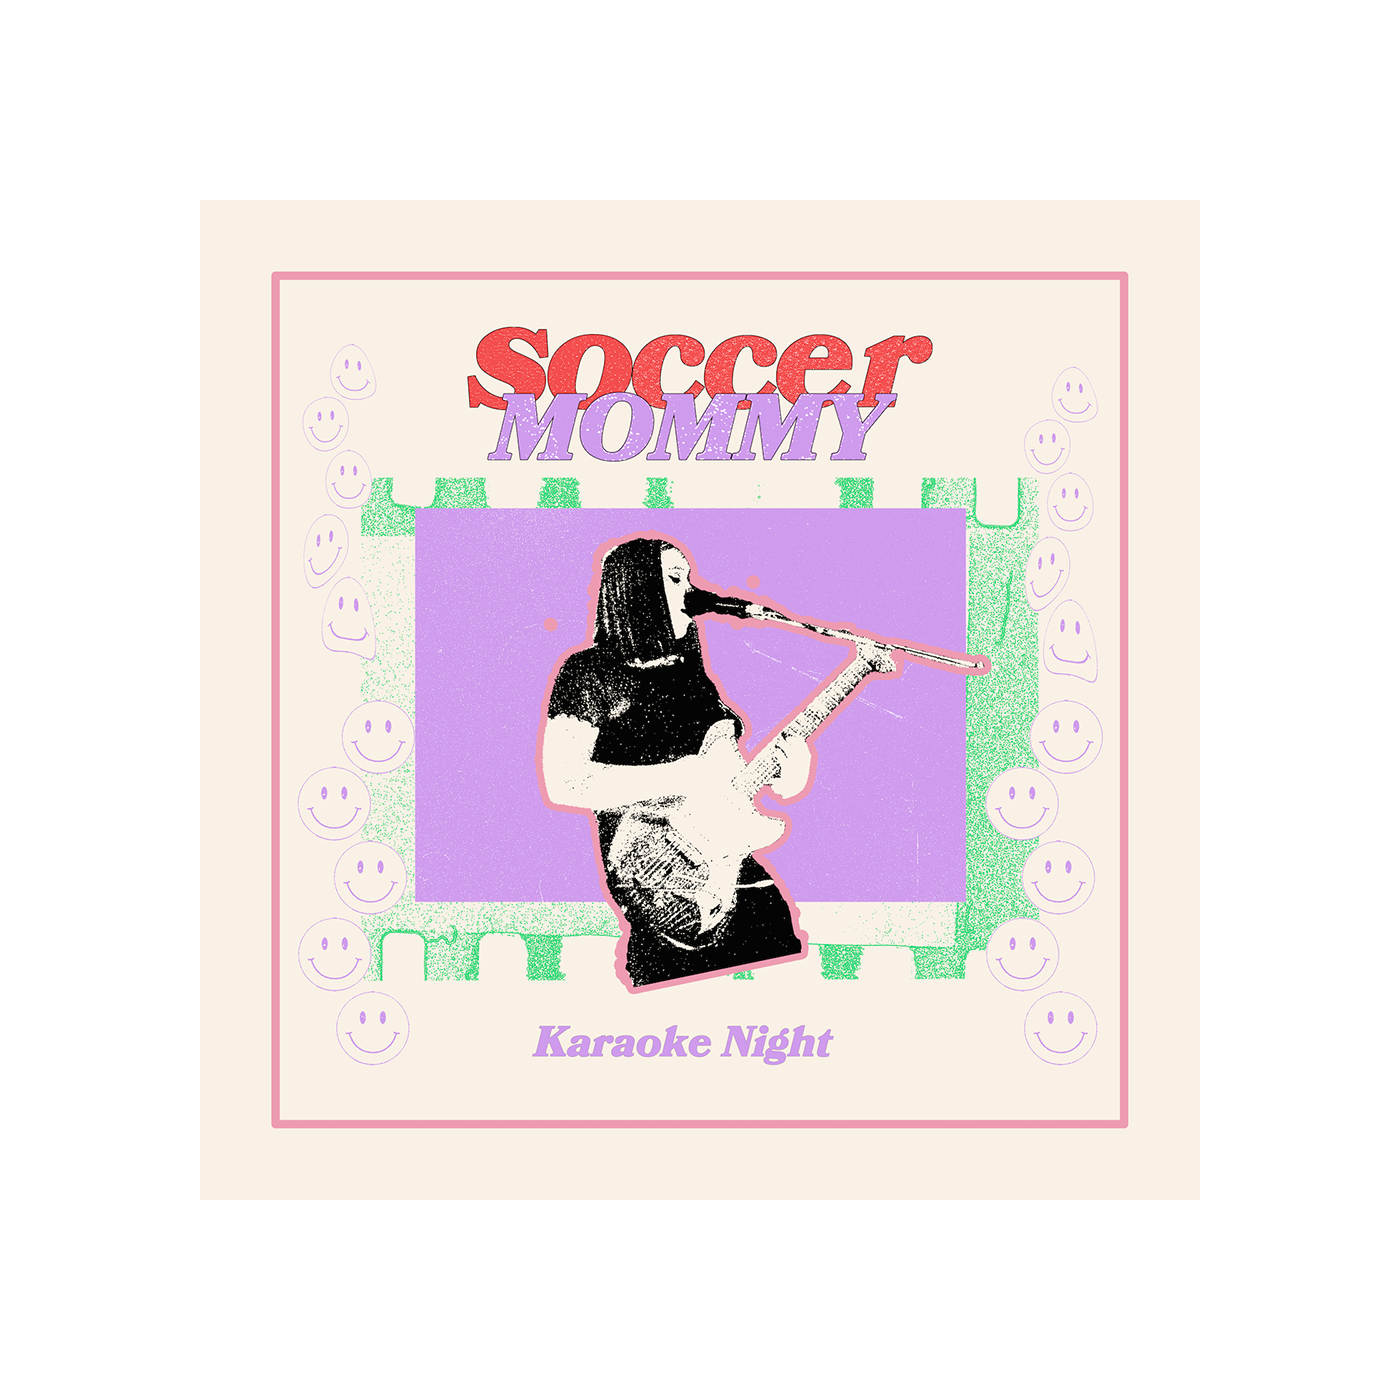 Karaoke Night Digital Album